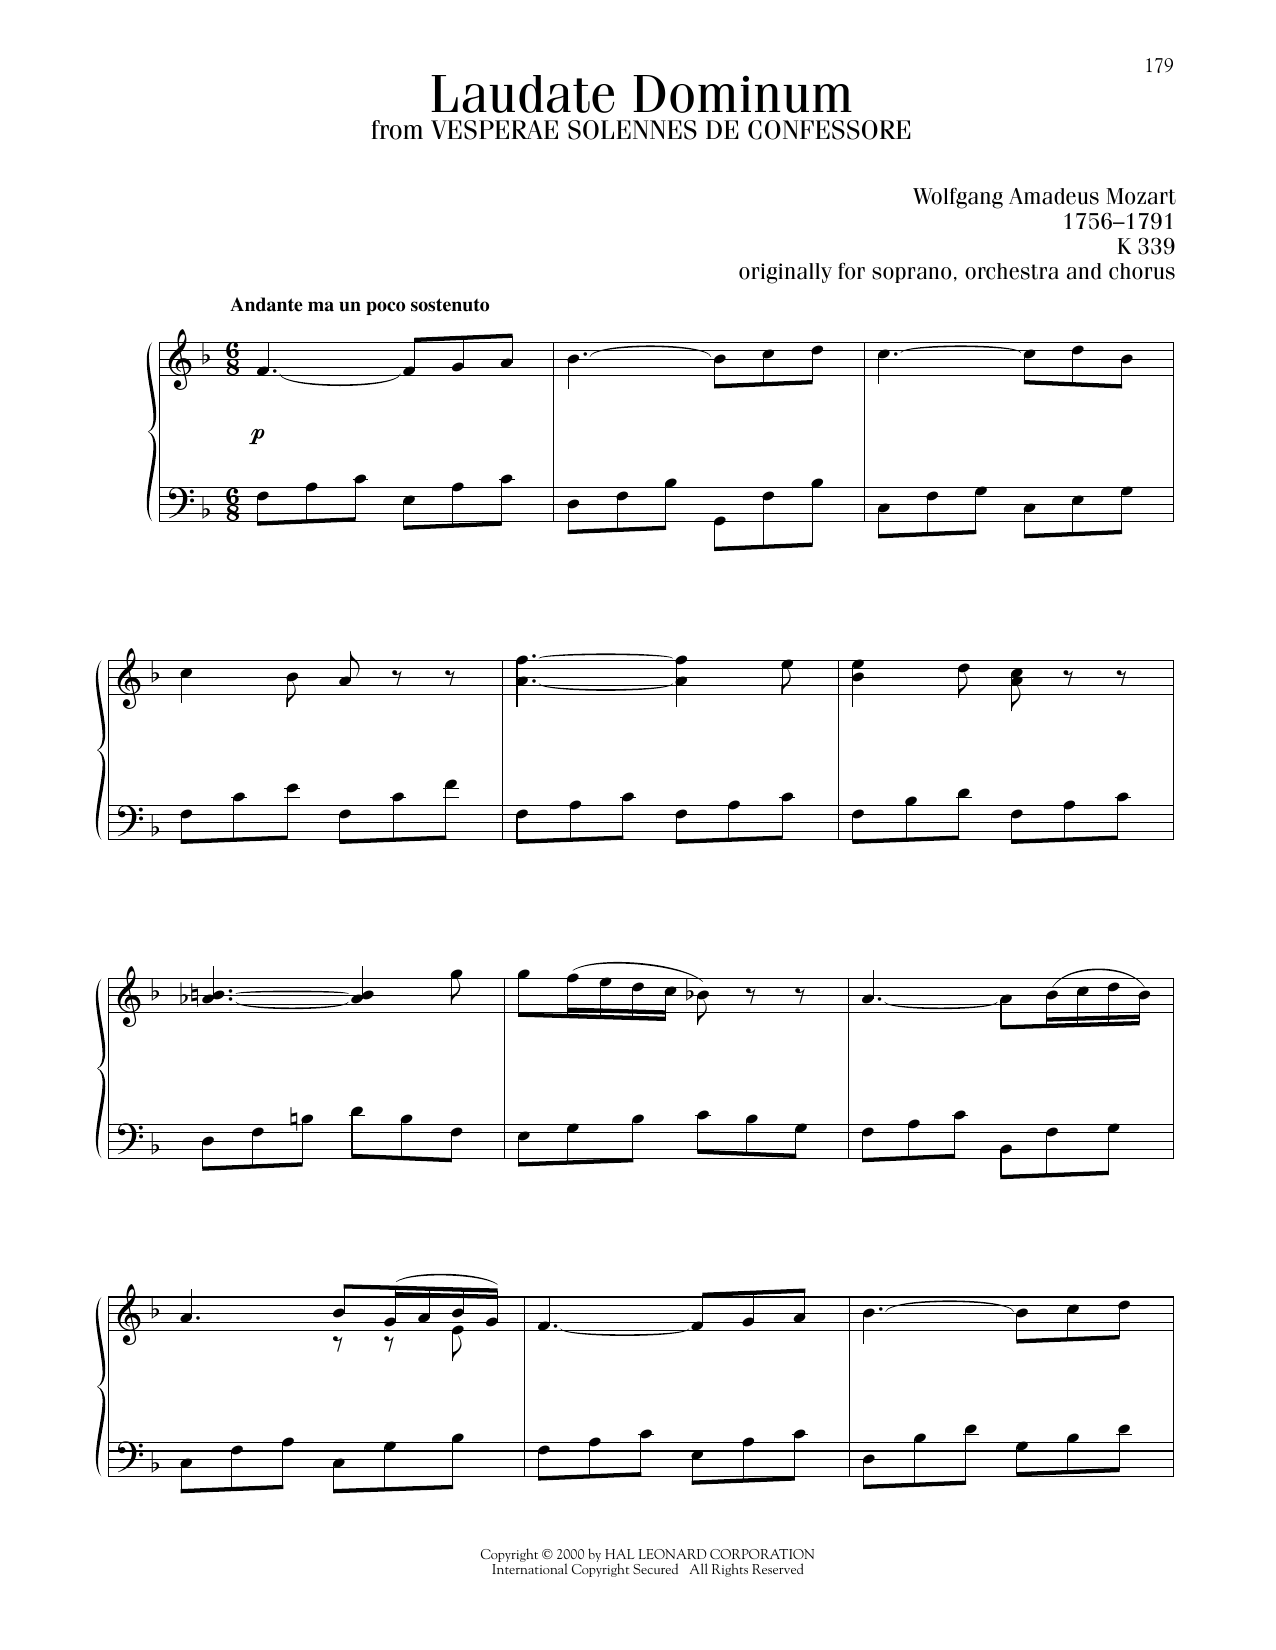 Wolfgang Amadeus Mozart Laudate Dominum sheet music notes printable PDF score